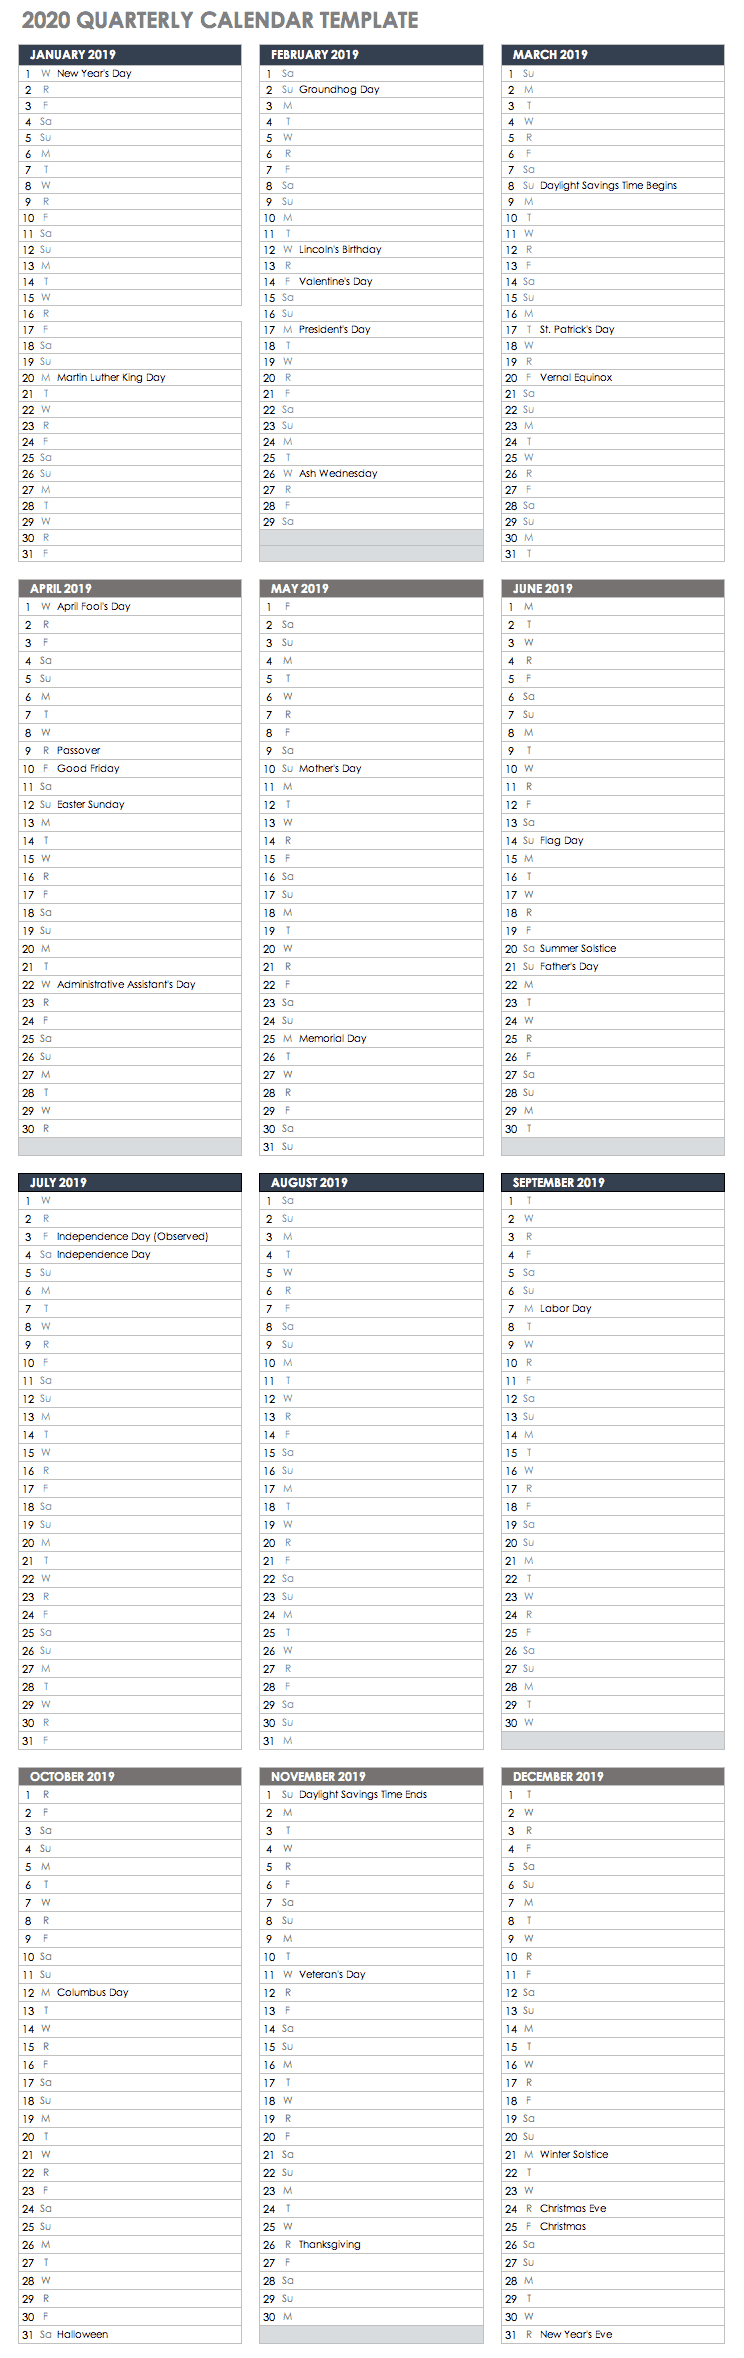 036 Template Ideas Ic Quarterly Calendar Biweekly Payroll for Quarterly Calendar Template Excel